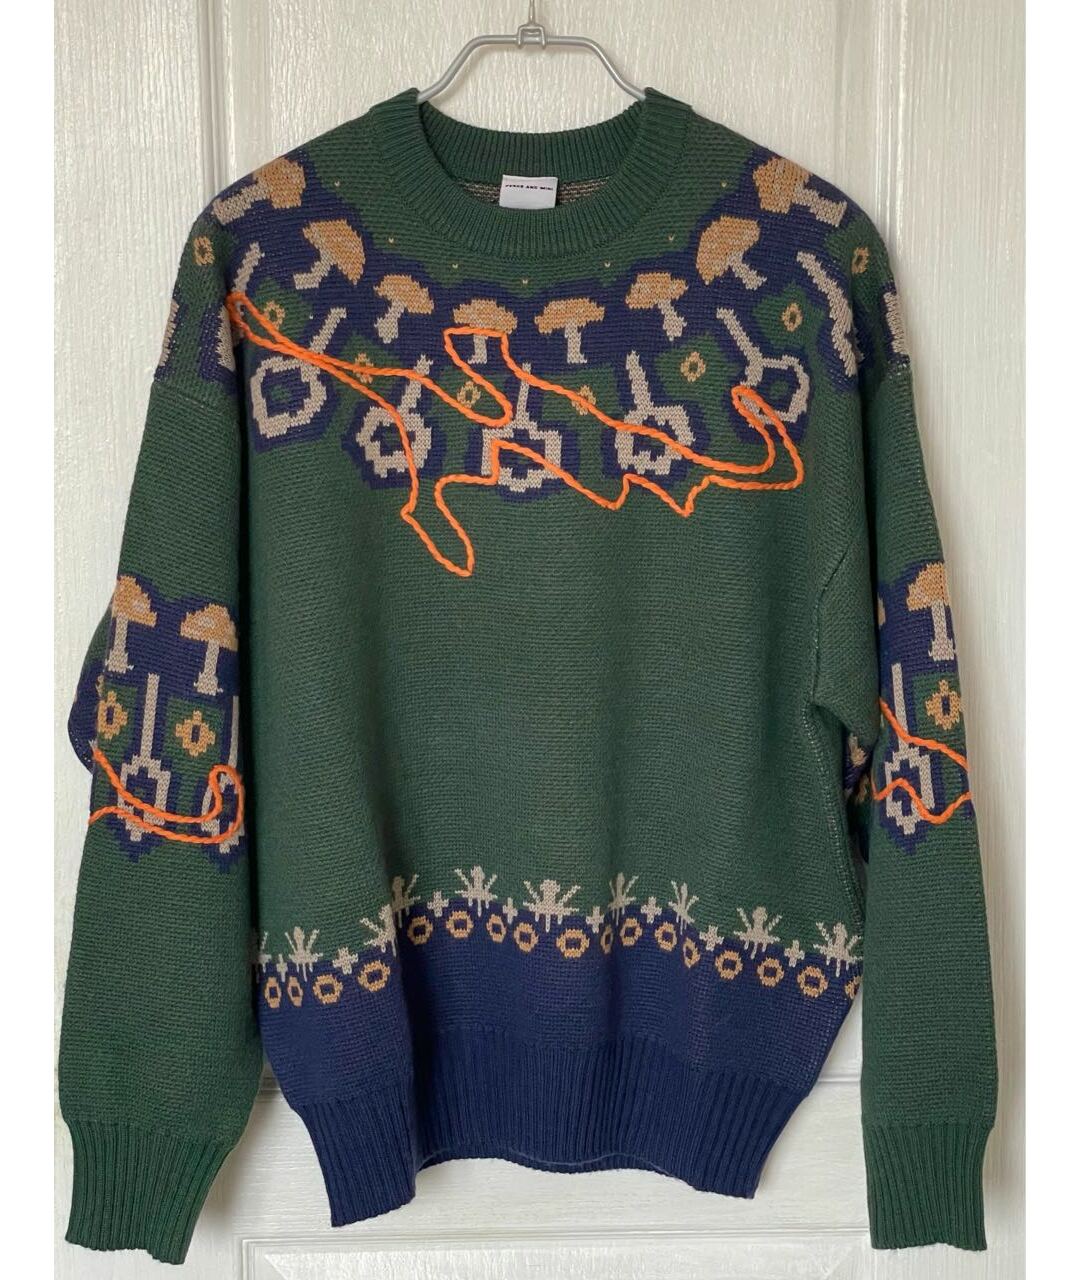 Perks and Mini Зеленый шерстяной джемпер / свитер, фото 2